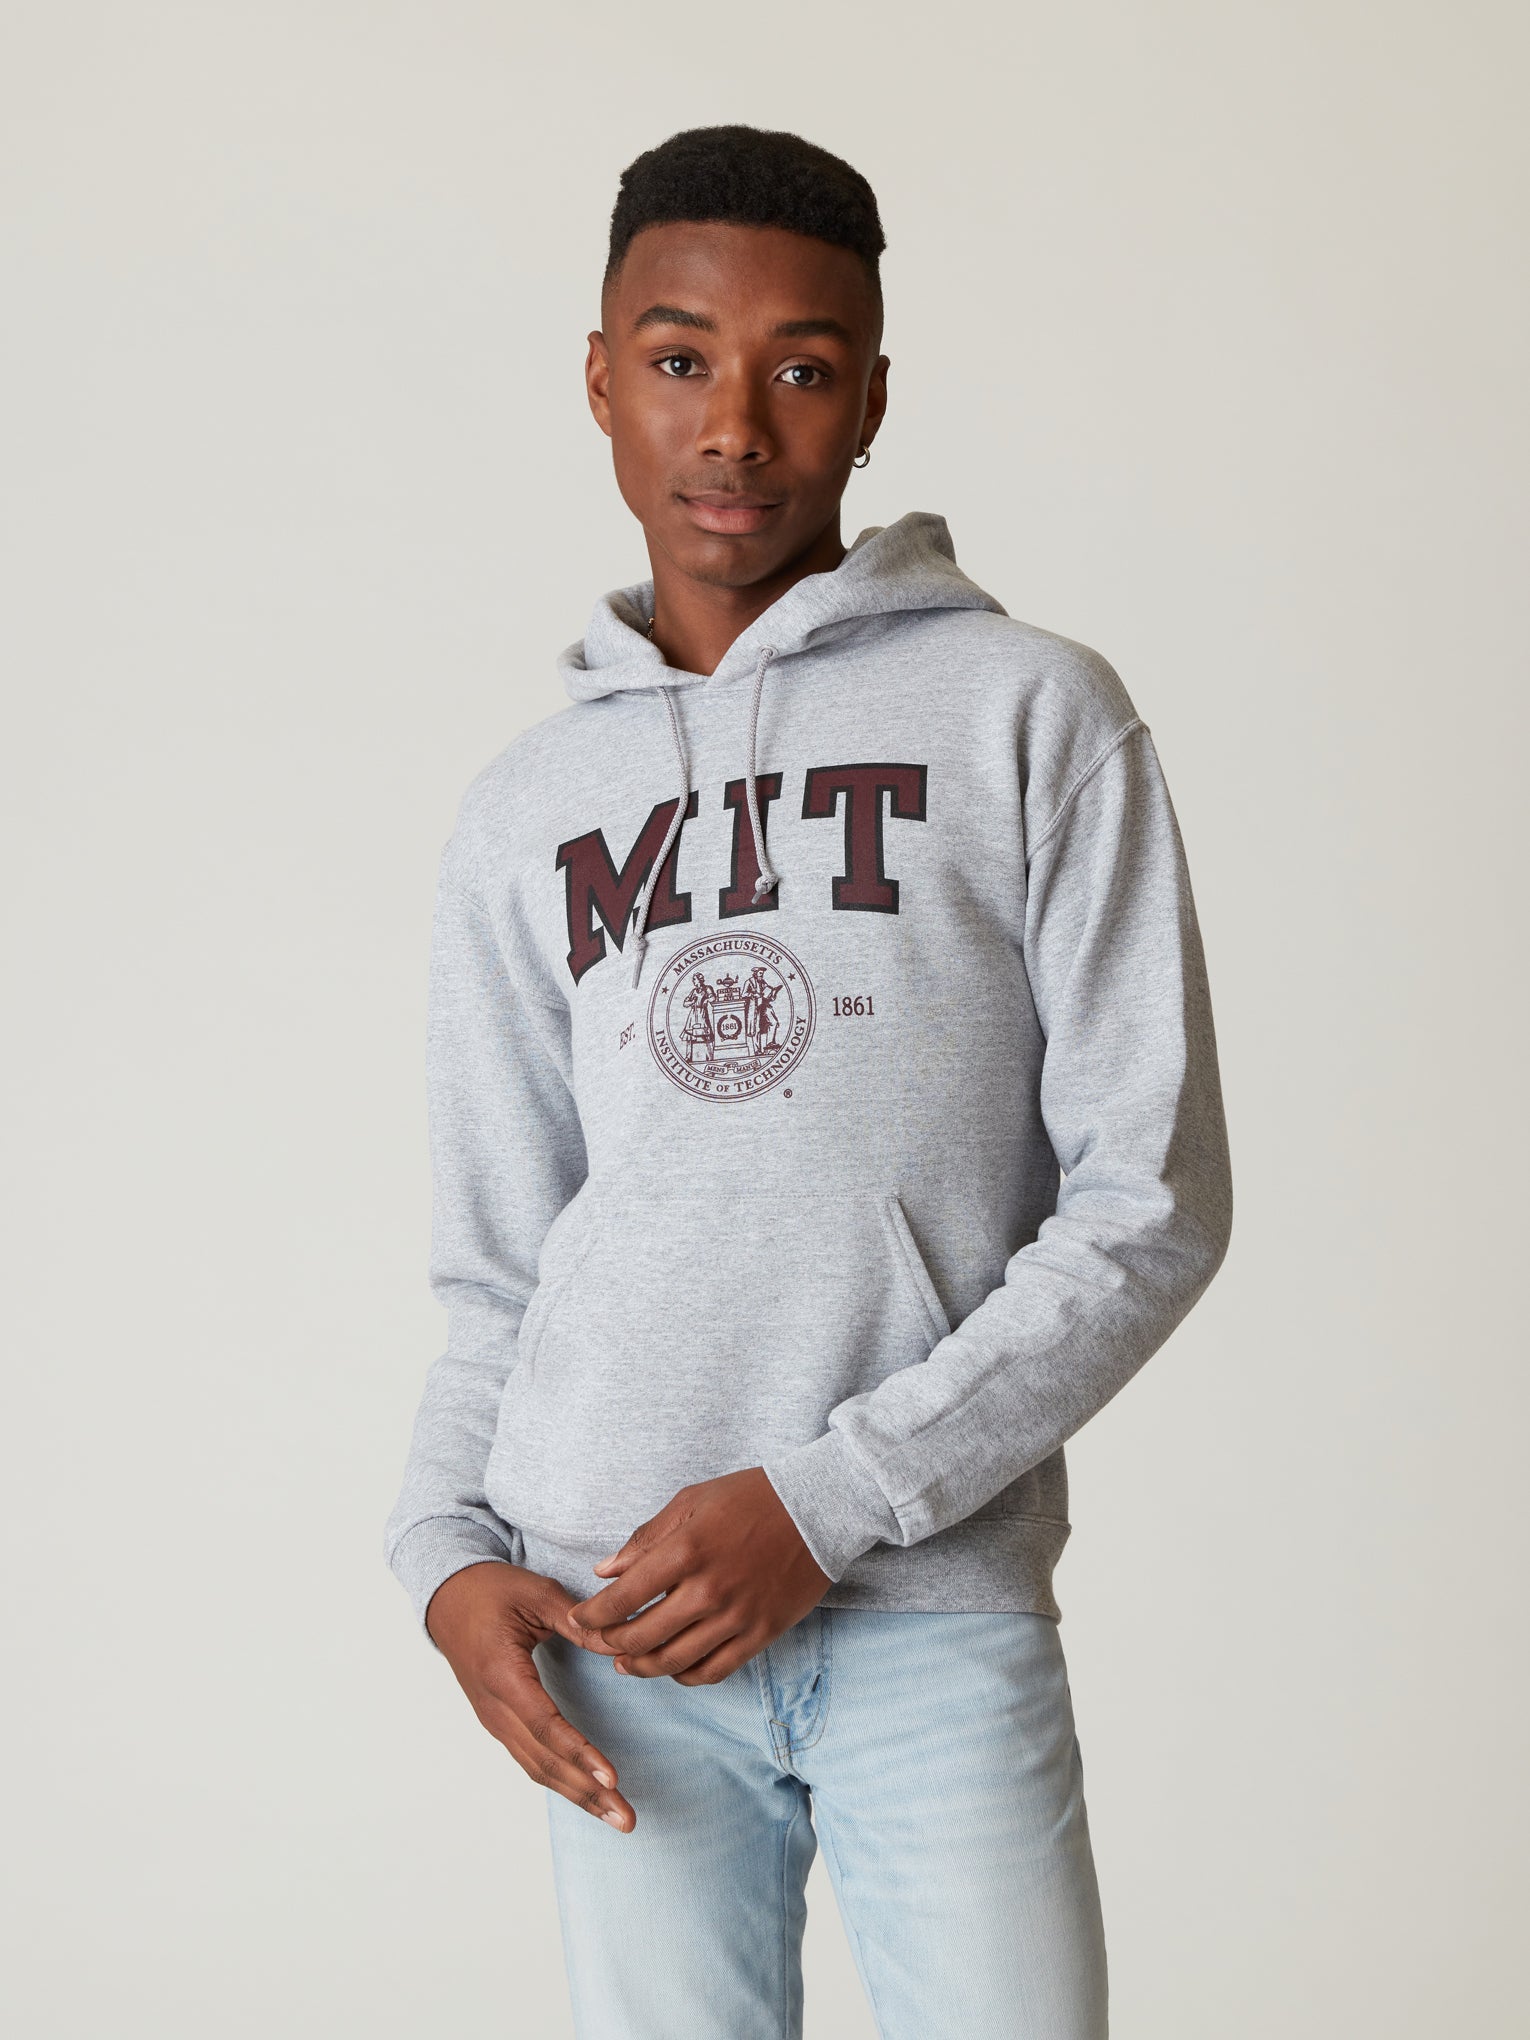 MIT Hooded Sweatshirt